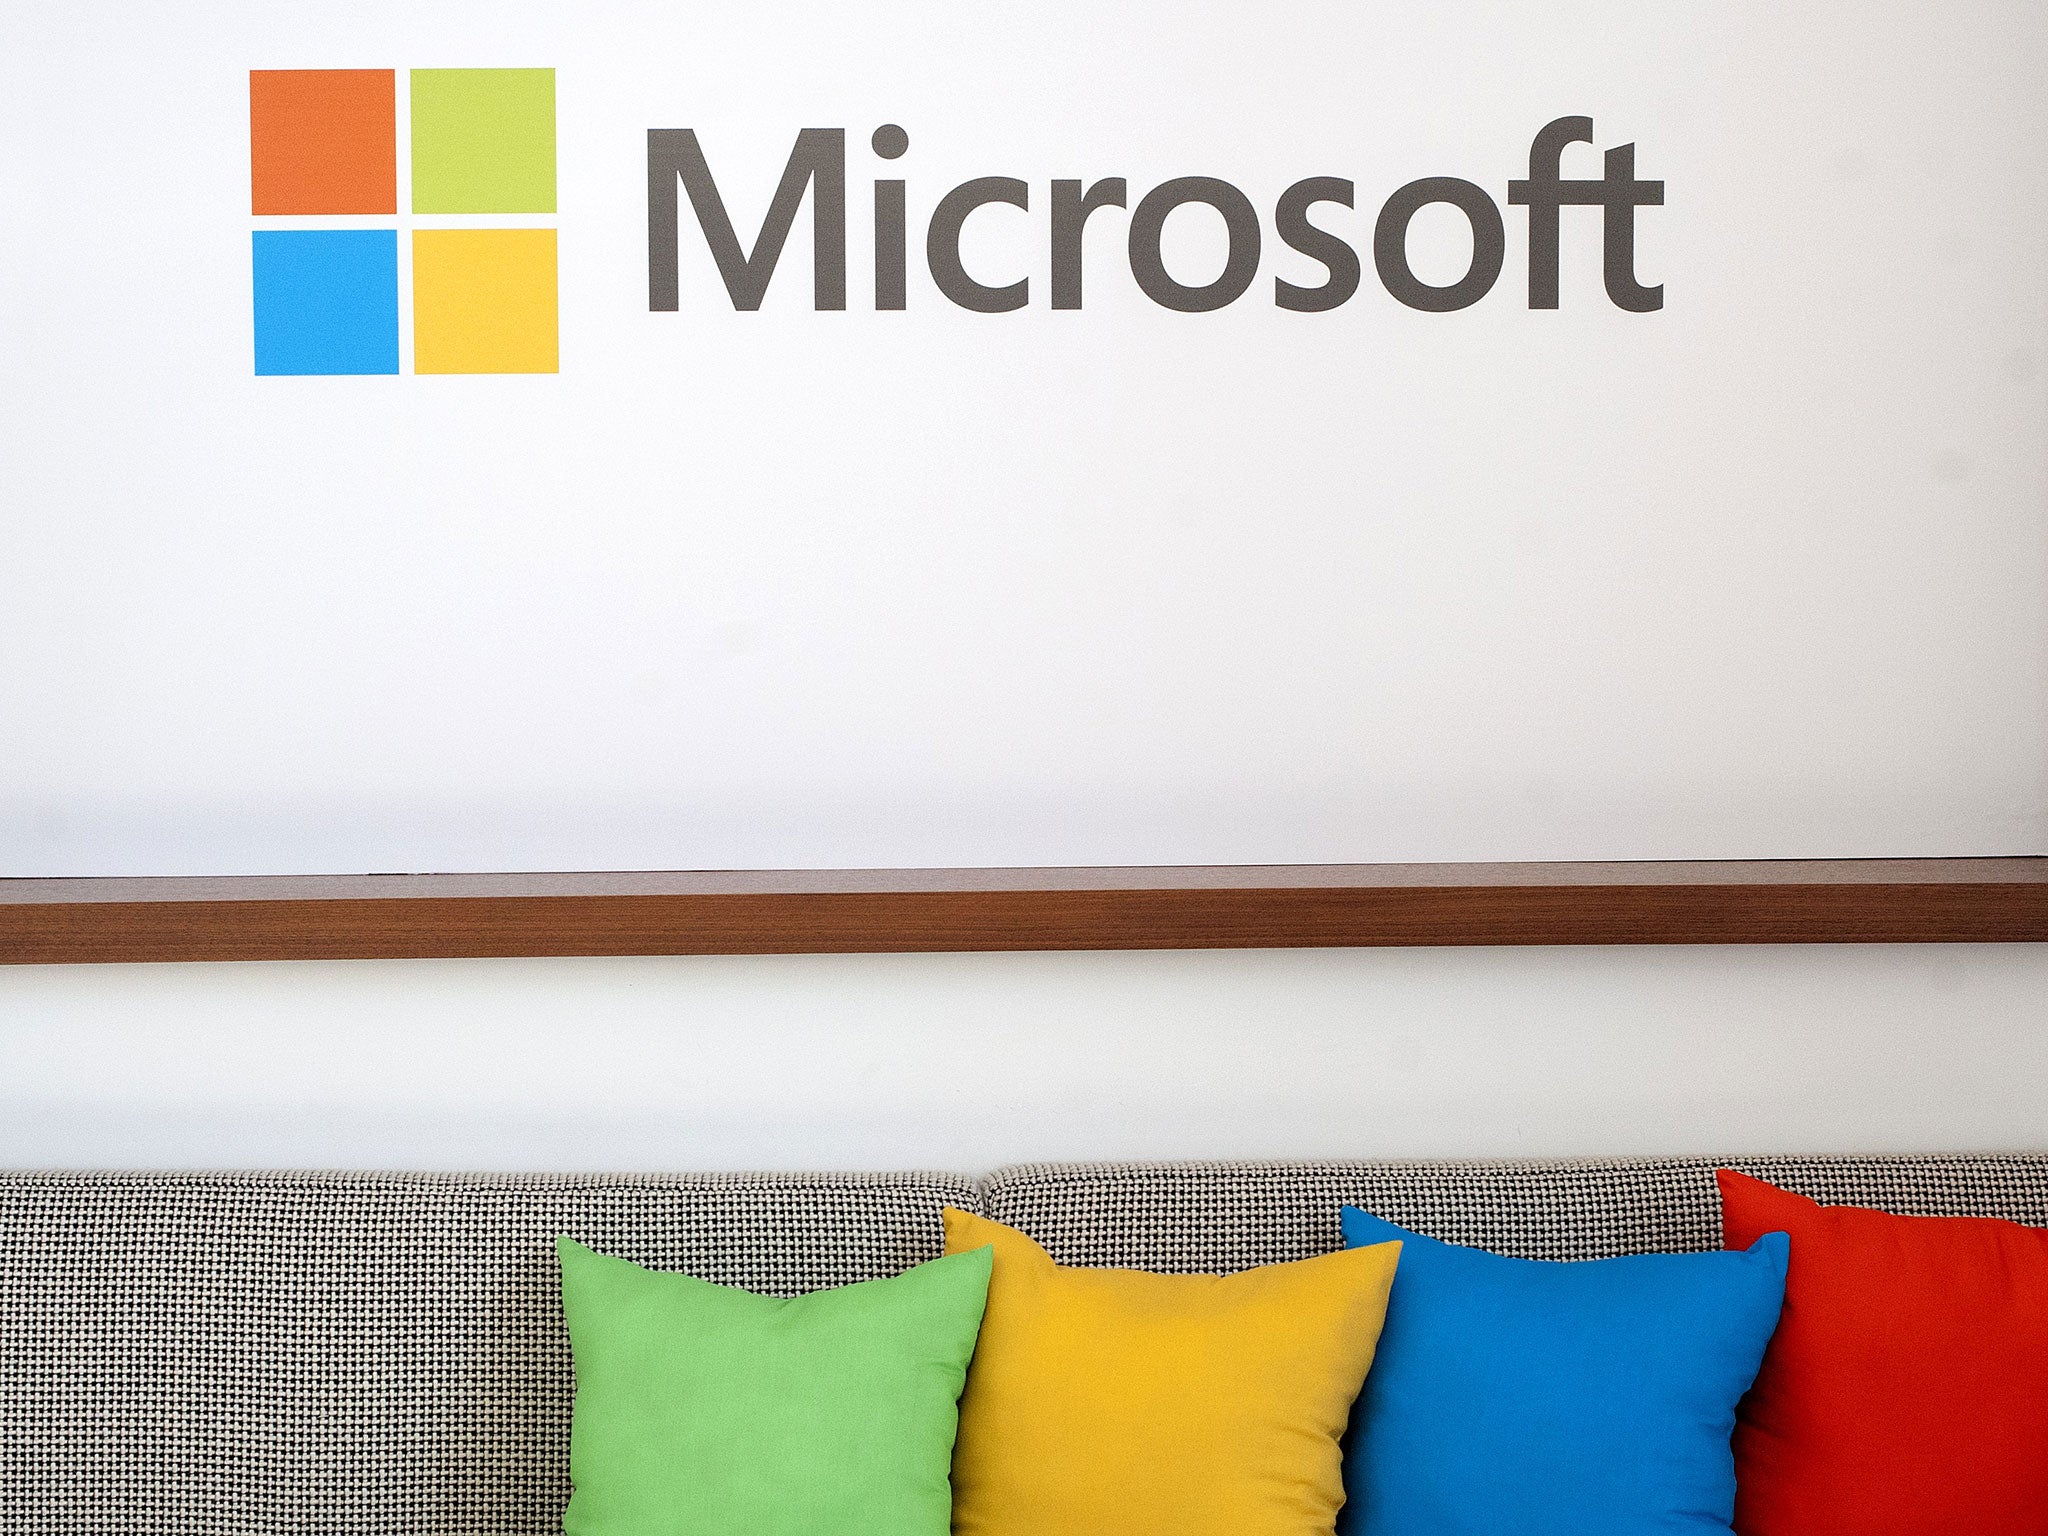 Microsoft is set to launch Windows 10